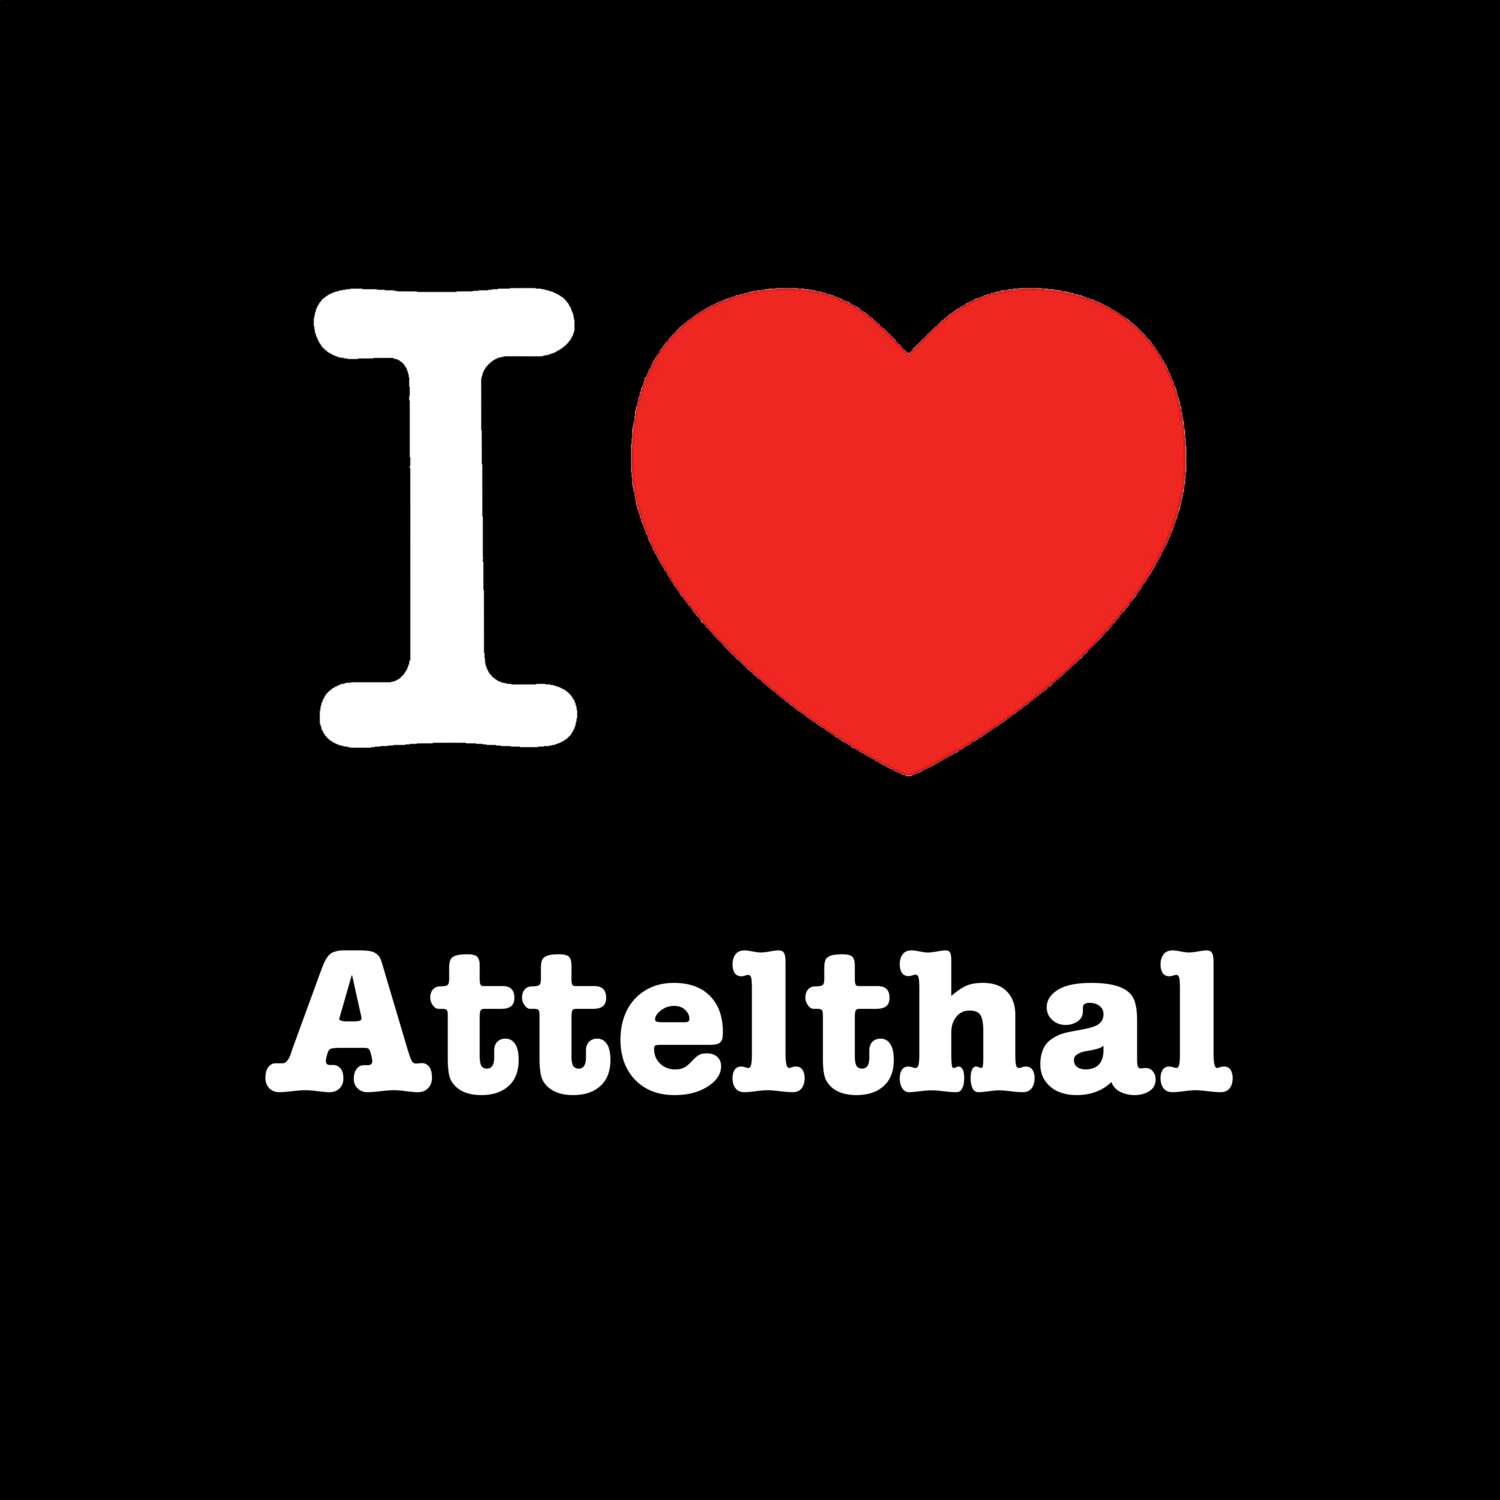 Attelthal T-Shirt »I love«